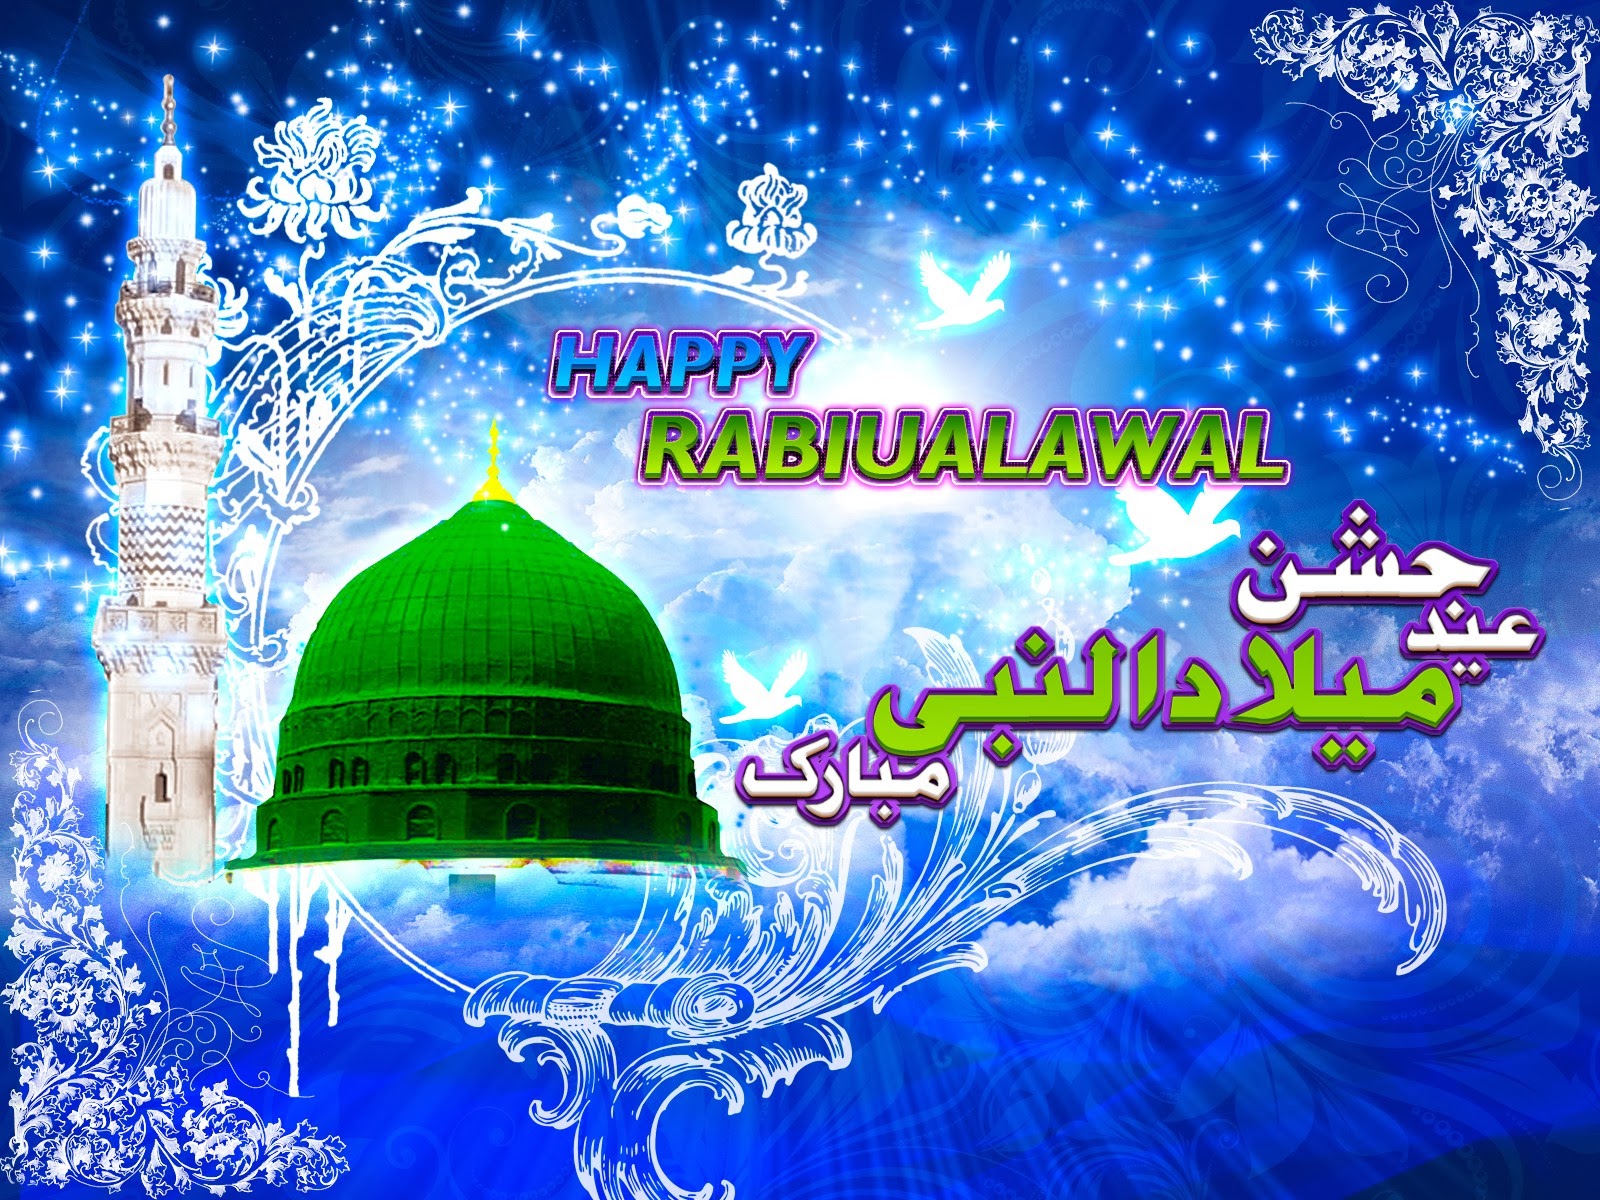 Eid Milad Un Nabi 2014 Wallpapers HD Free download ...